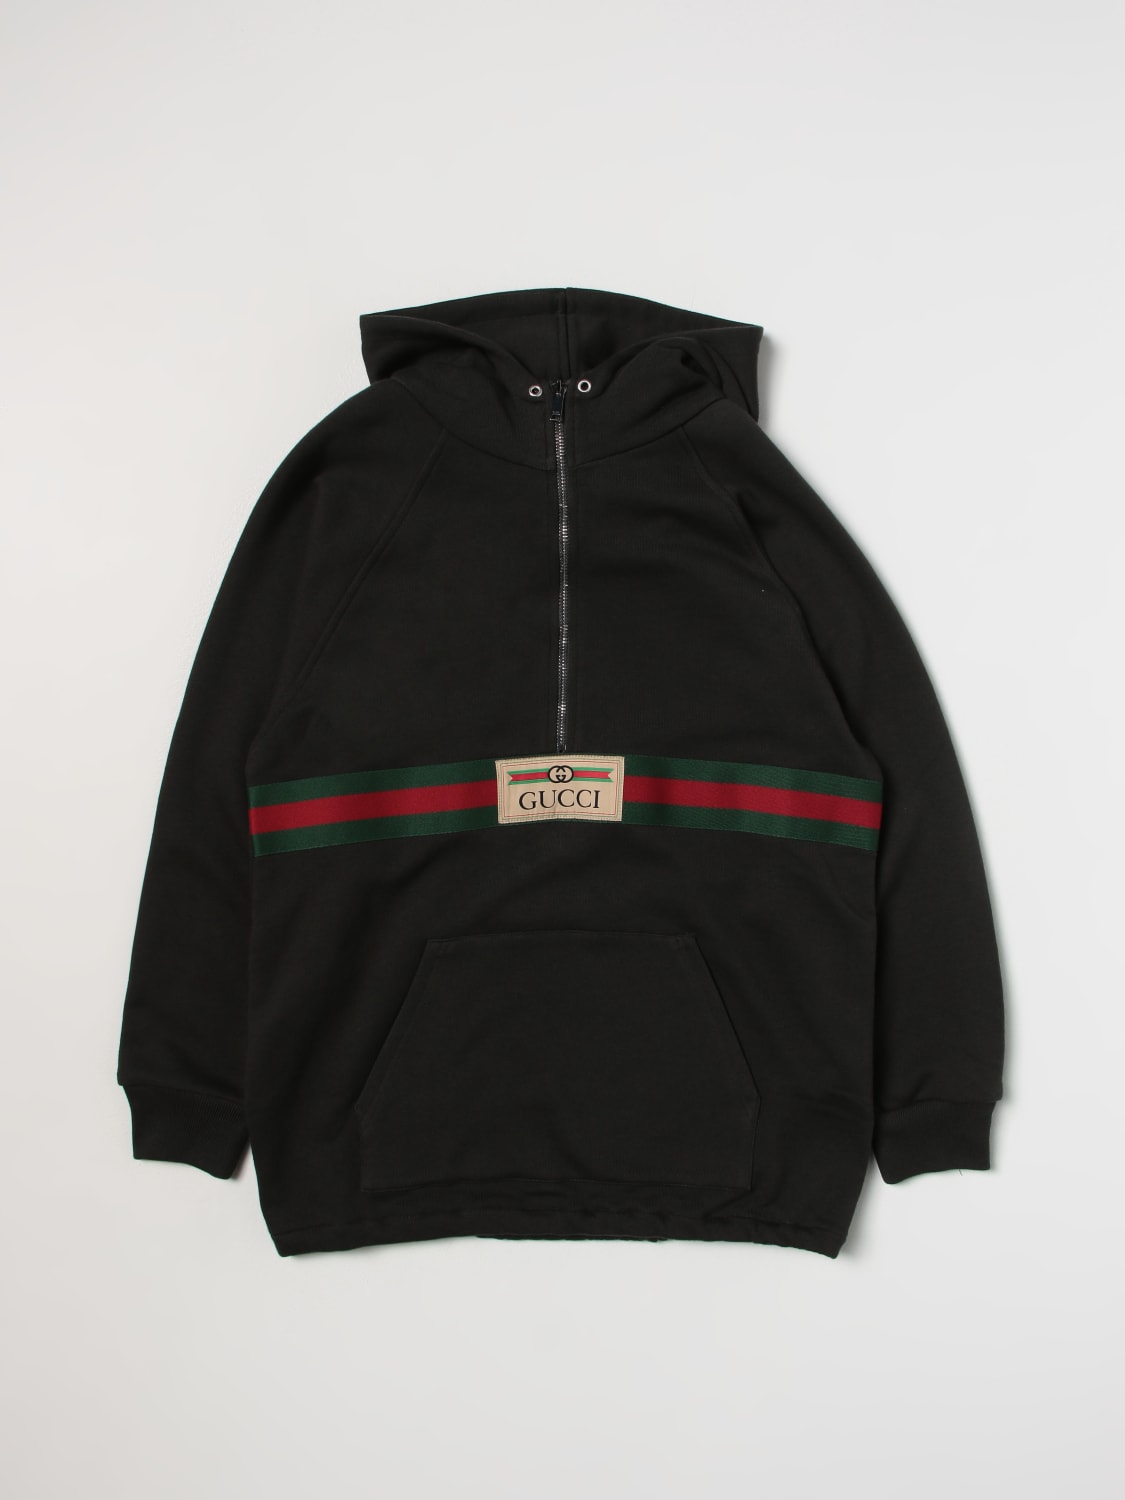 Rynke panden Irreplaceable Livlig GUCCI: sweatshirt in wool blend - Black | Gucci sweater 653666XJDKA online  at GIGLIO.COM